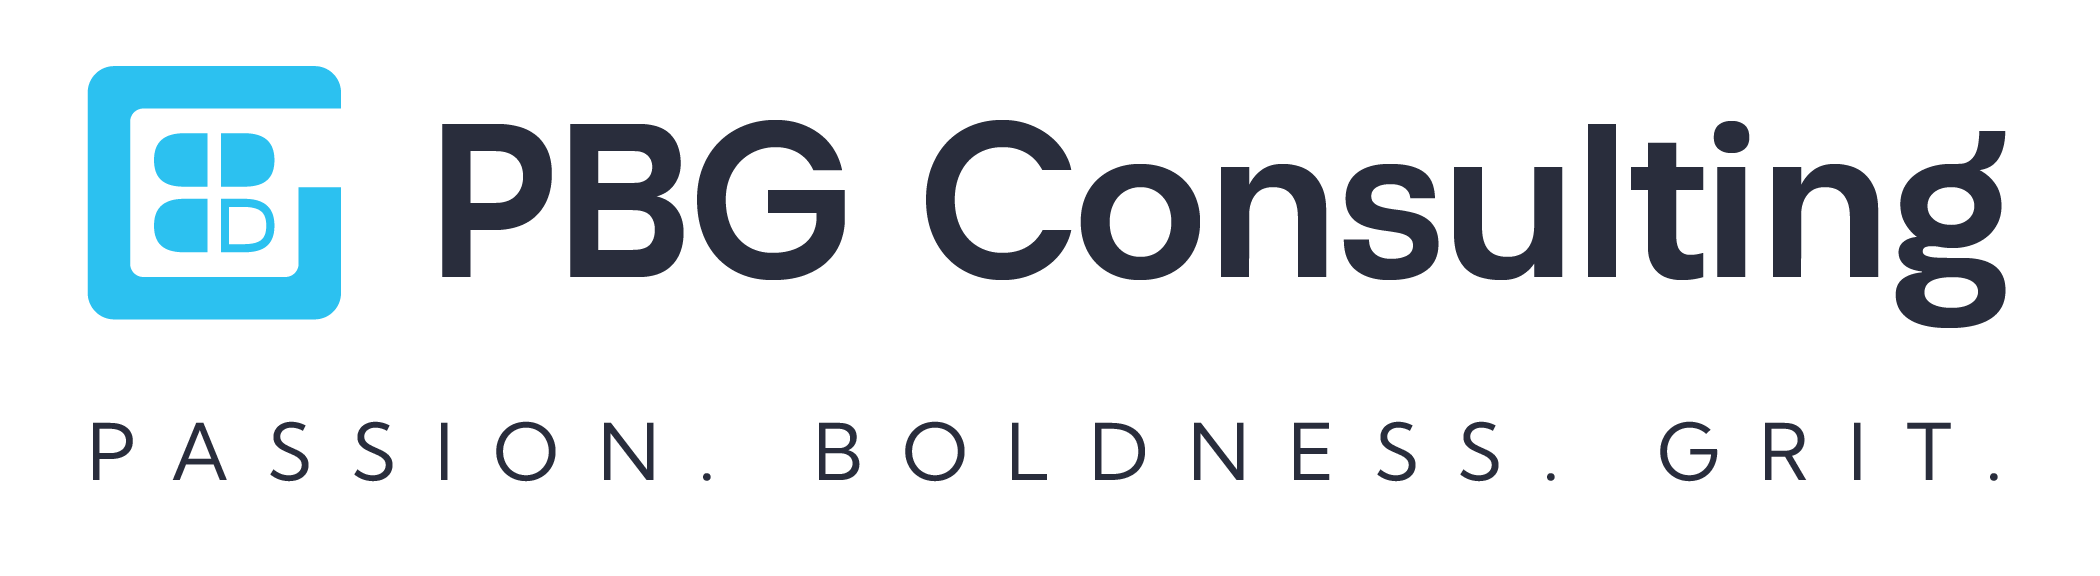 PBG Consulting Logo